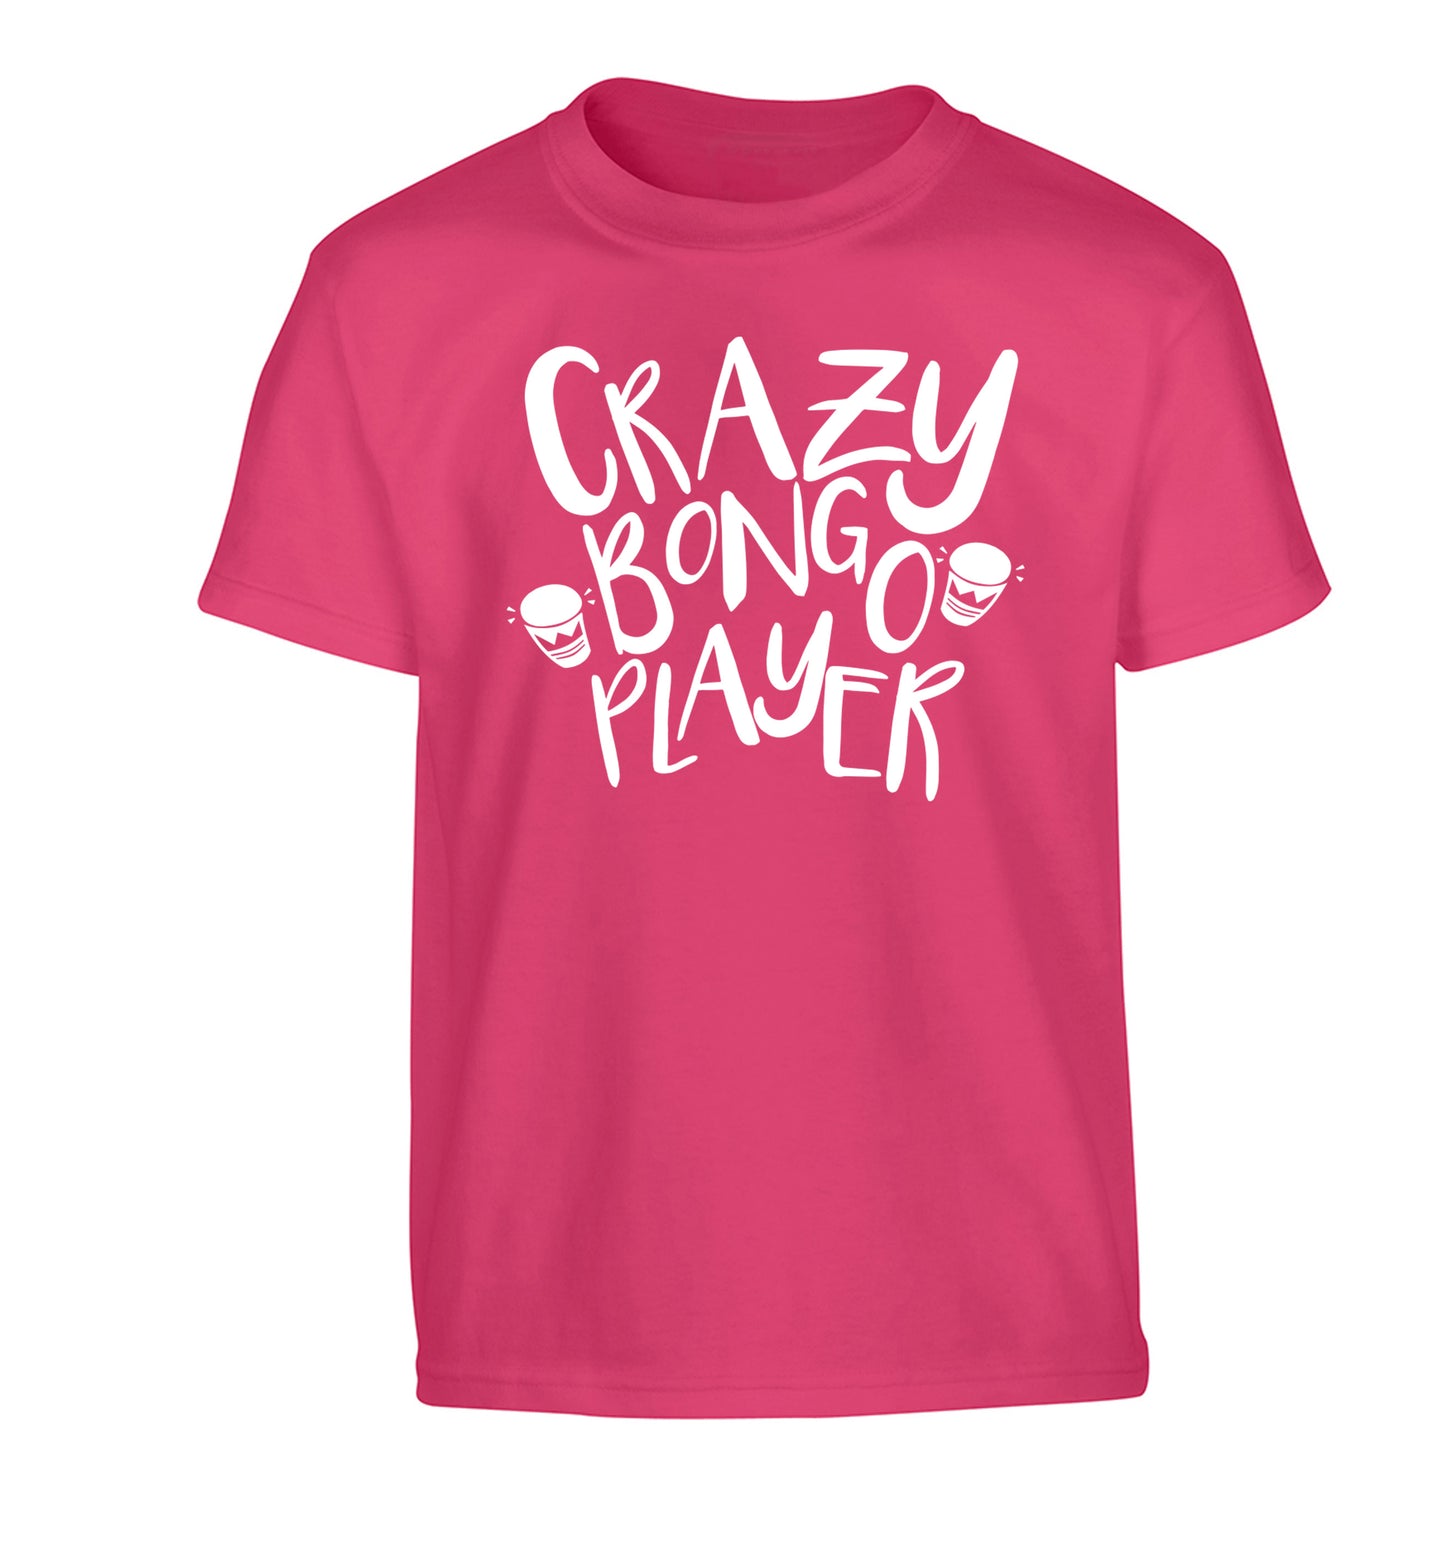 Crazy bongo player Children's pink Tshirt 12-14 Years